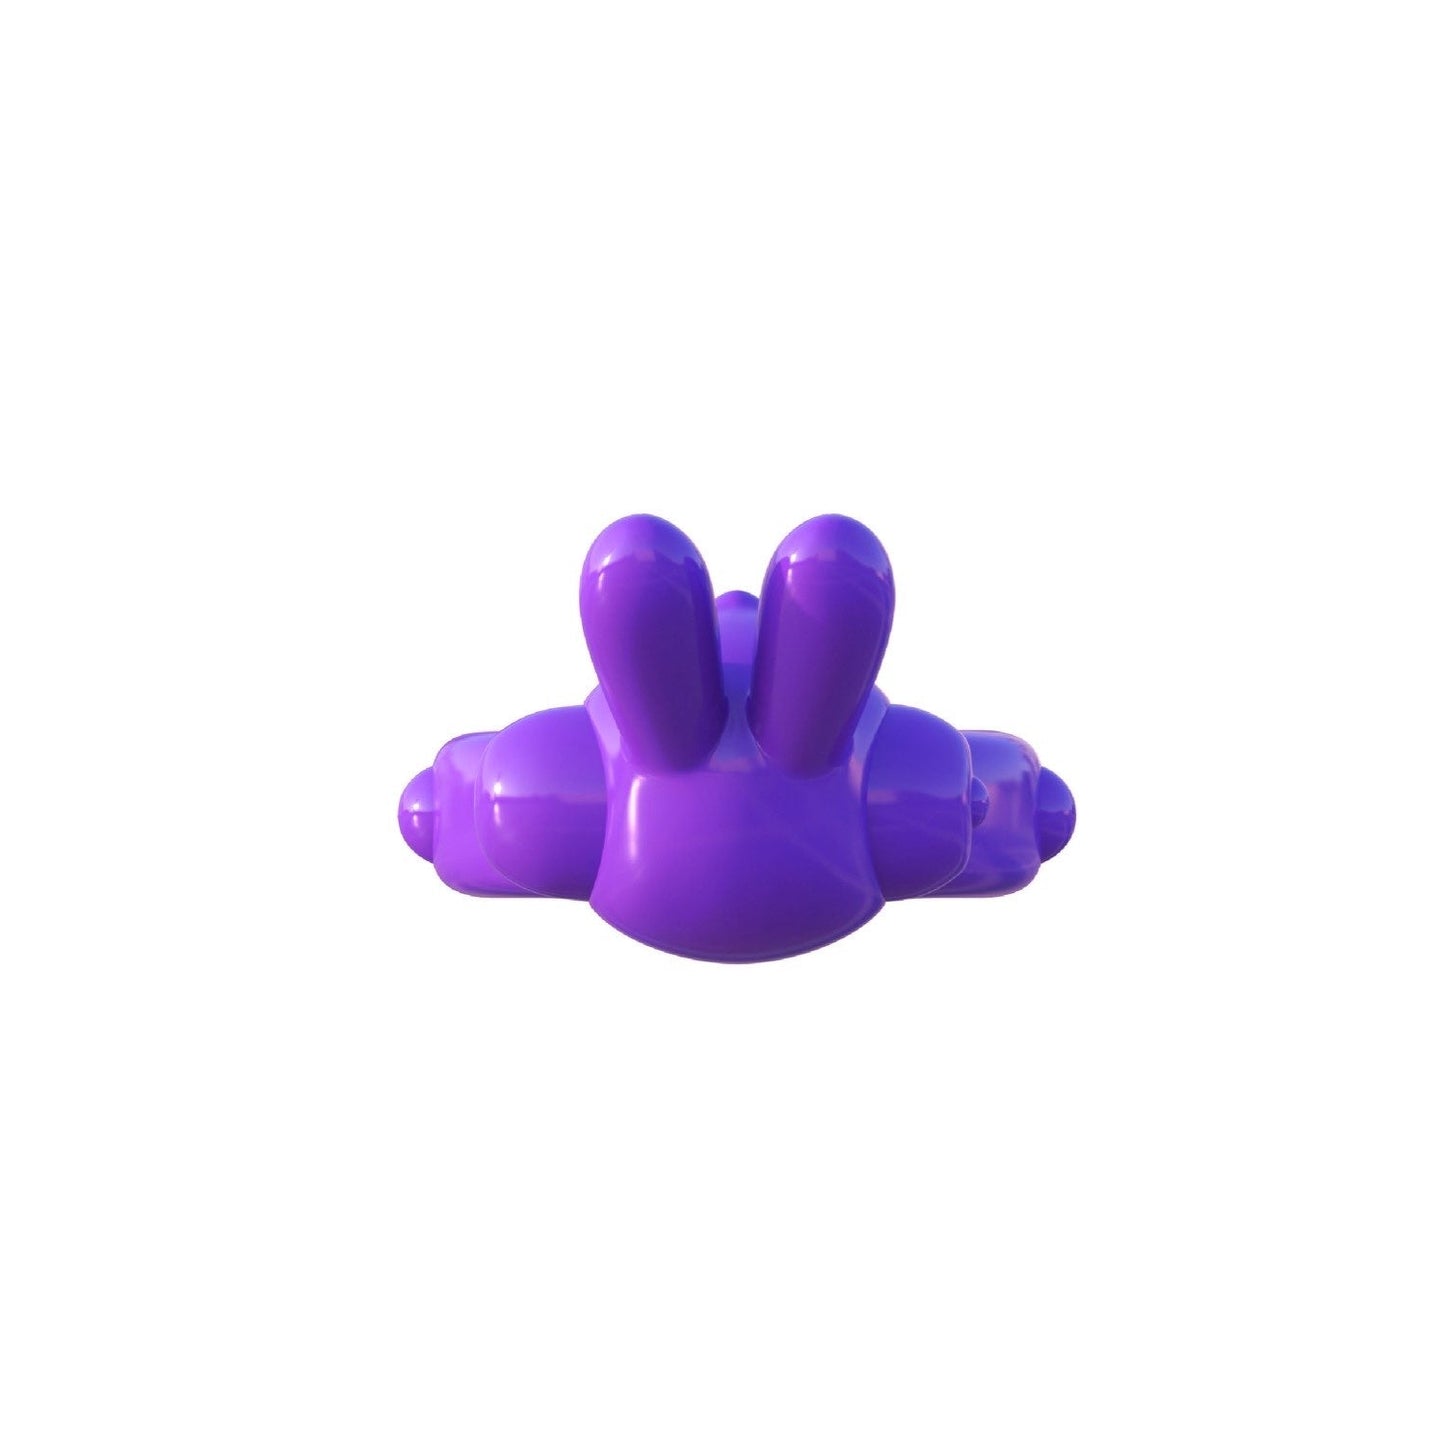 Ultimate Rabbit Ring - Purple Vibrating Cock Ring